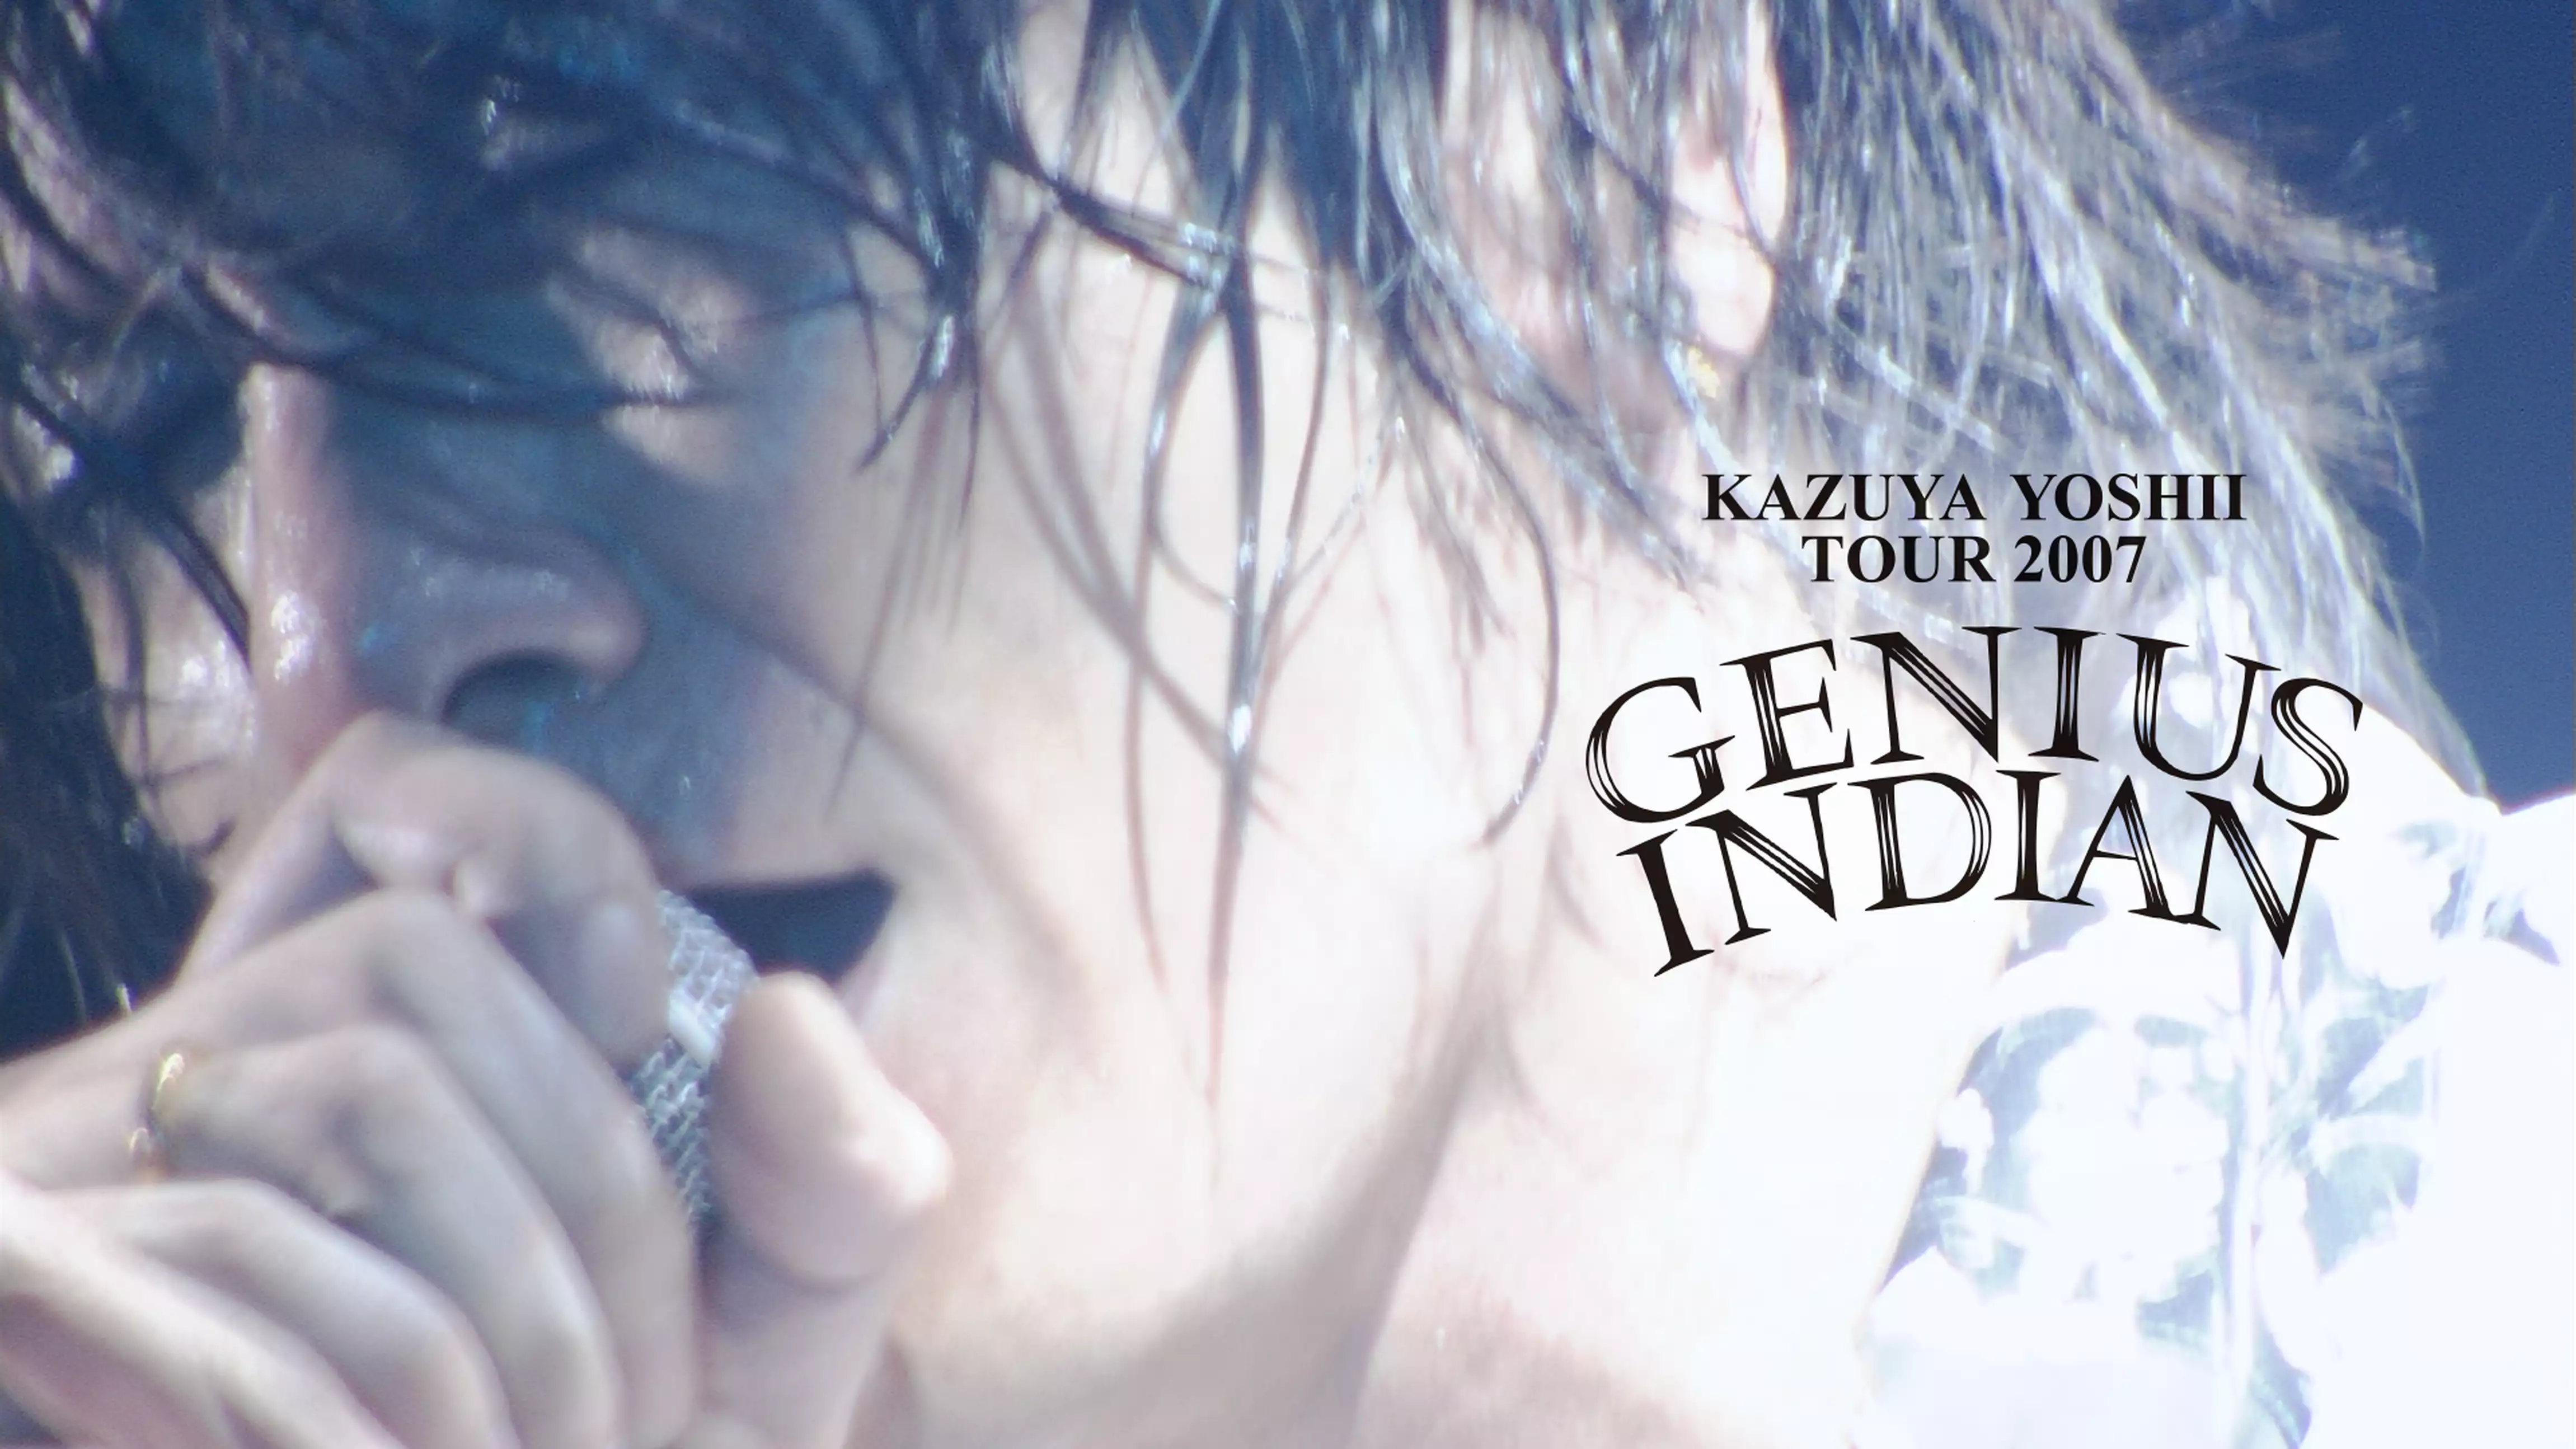 KAZUYA YOSHII GENIUS INDIAN TOUR 2007